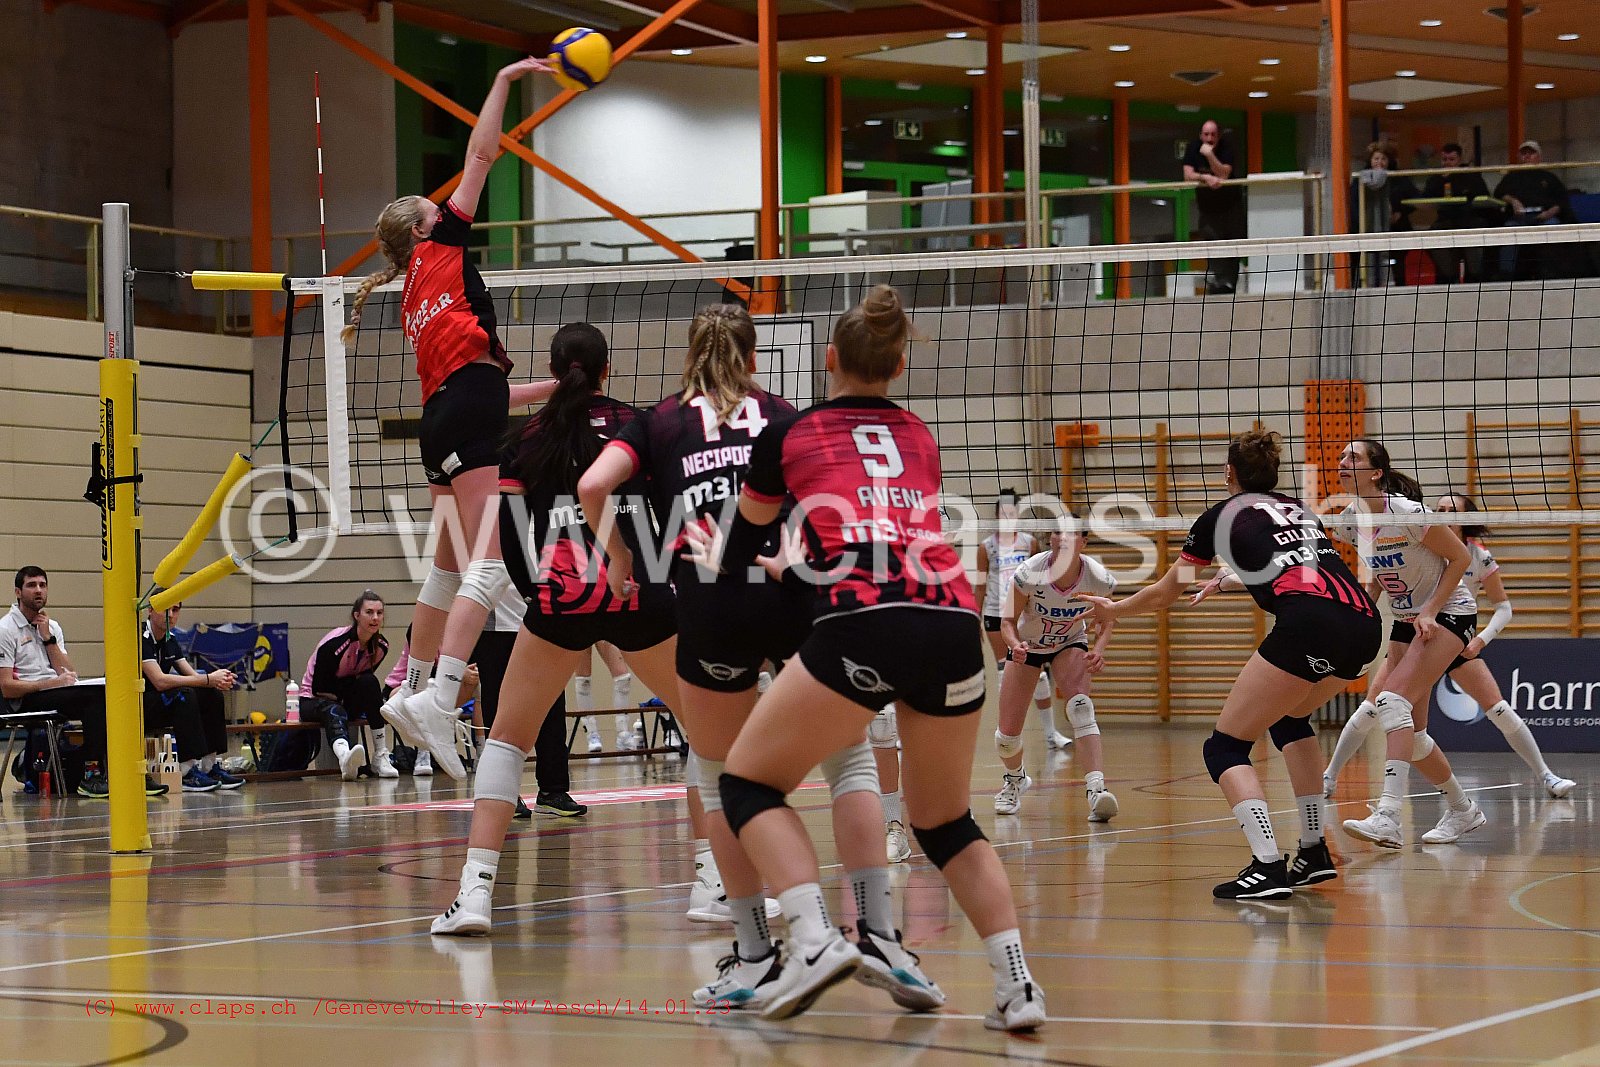 20230114 Genève Volley -SM Aesch